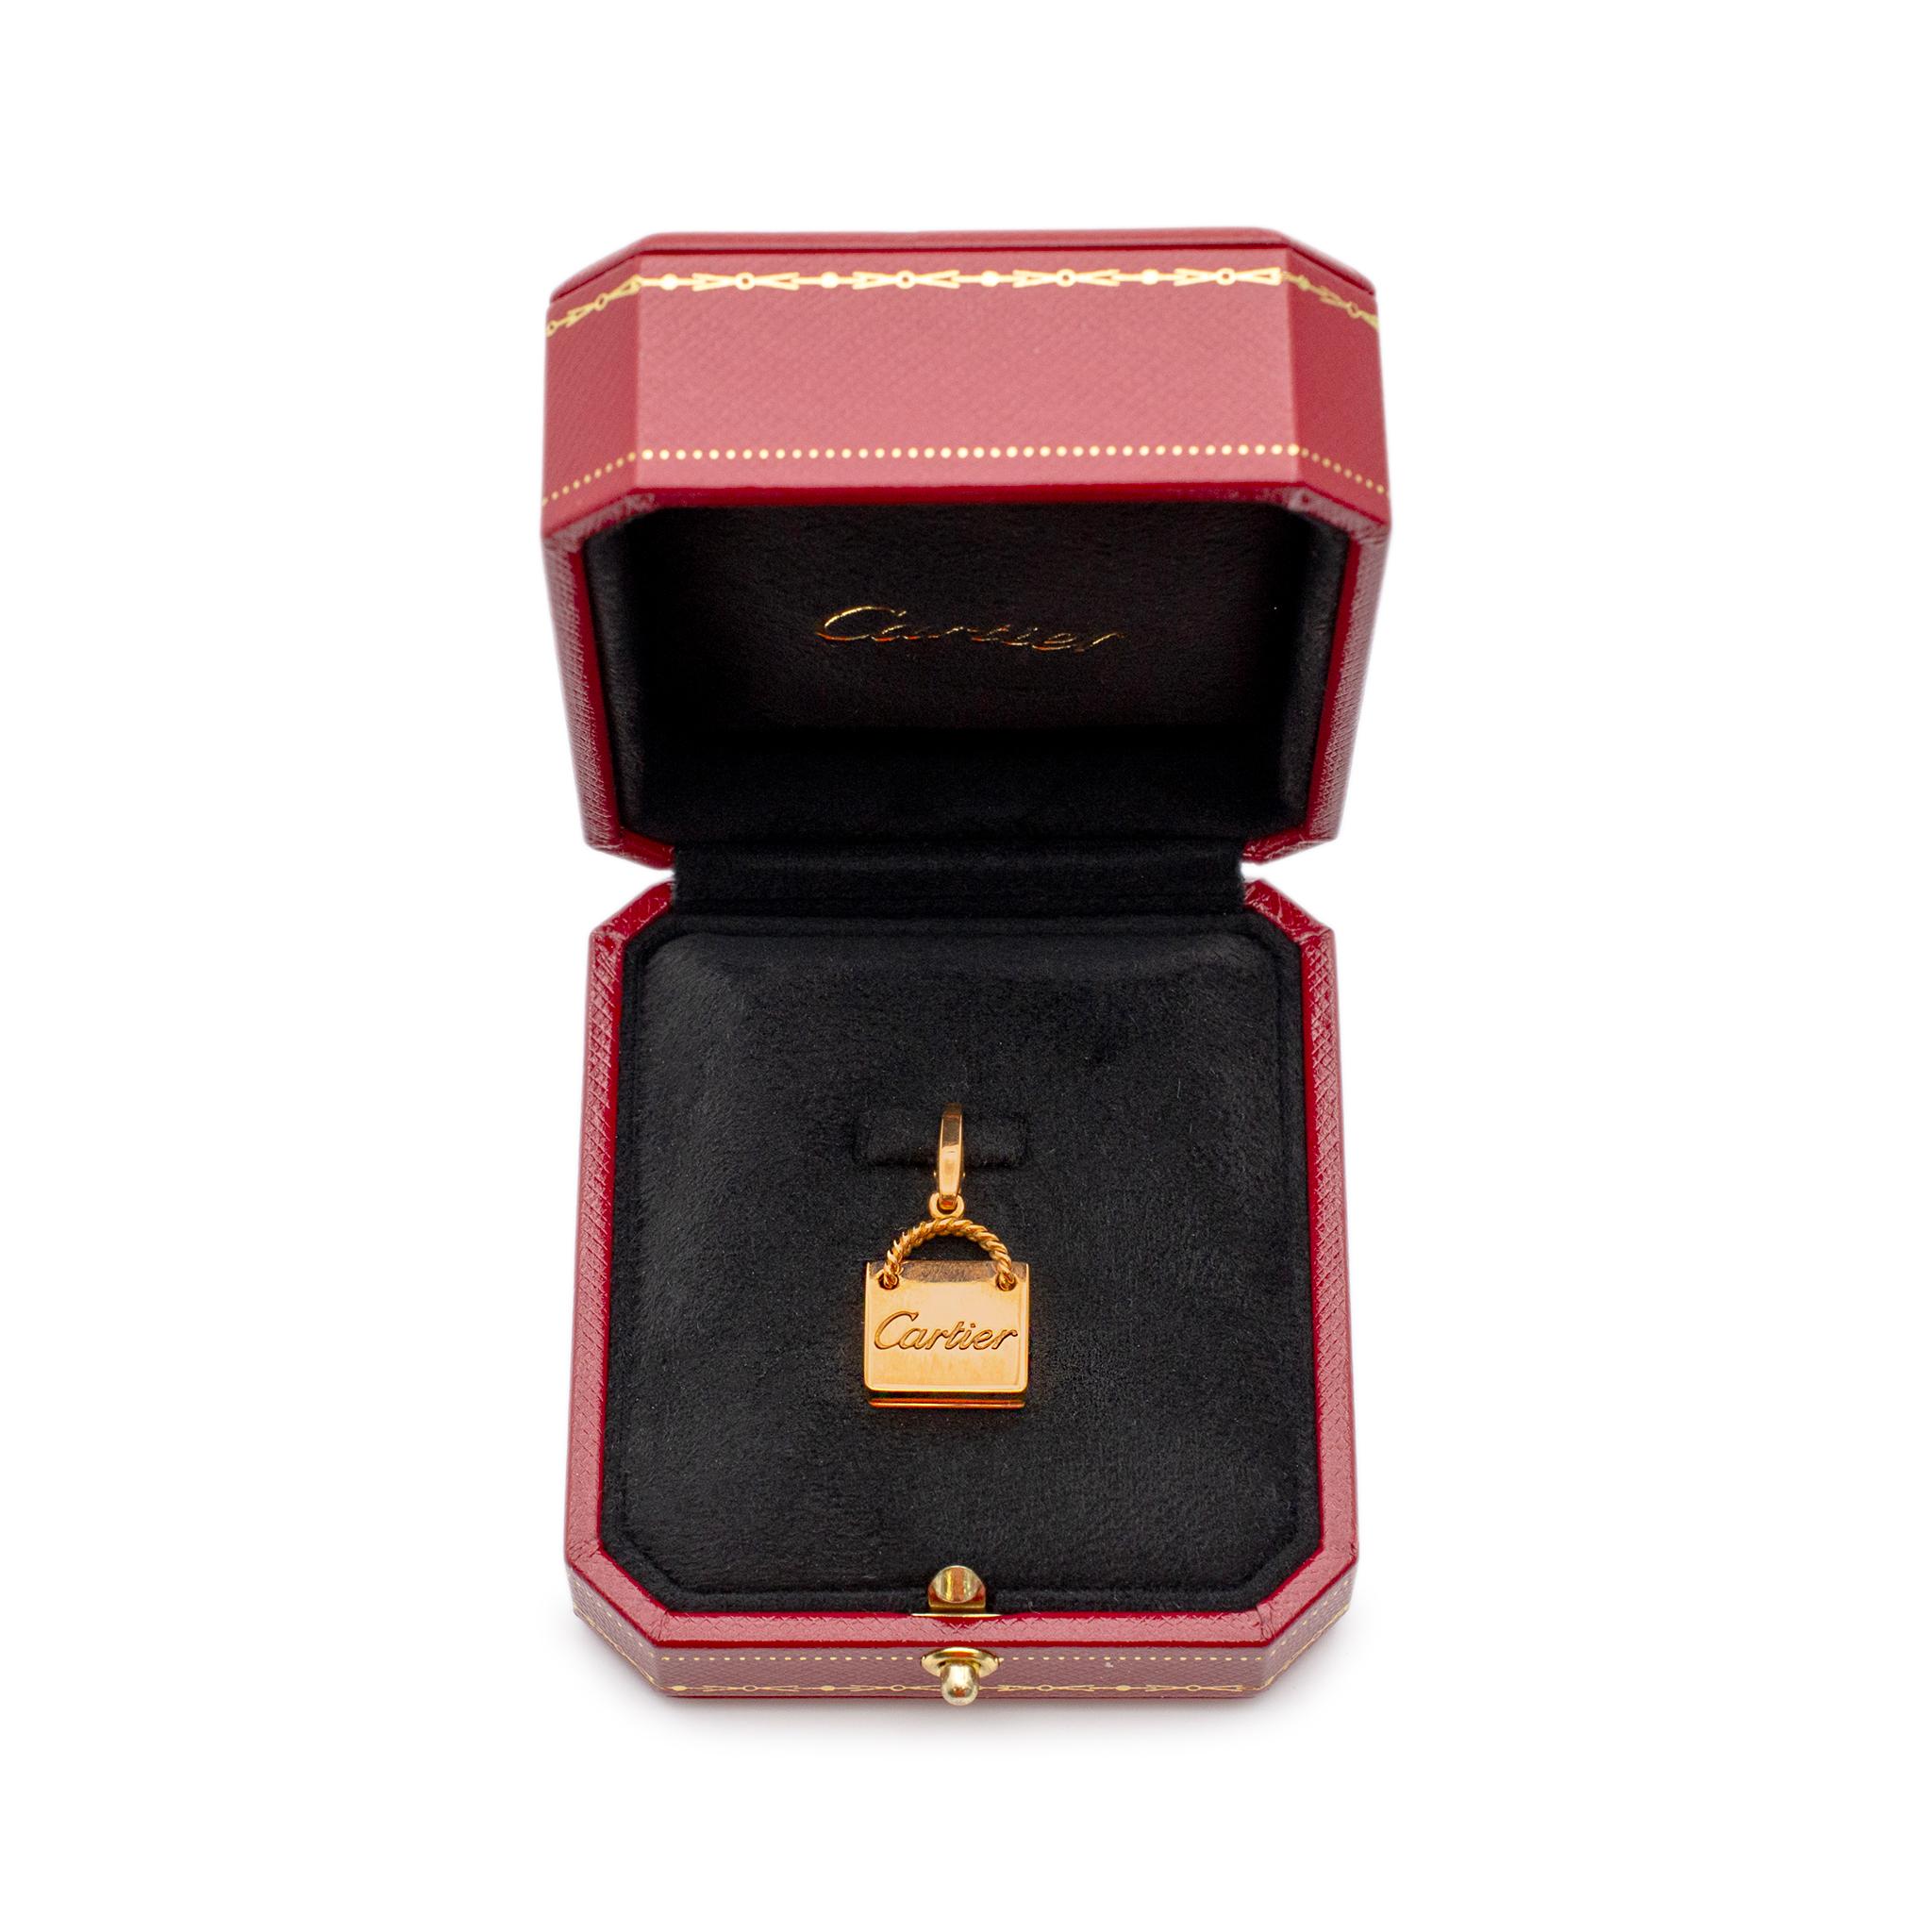 Cartier 18K Rose Gold Shopping Bag Charm 3